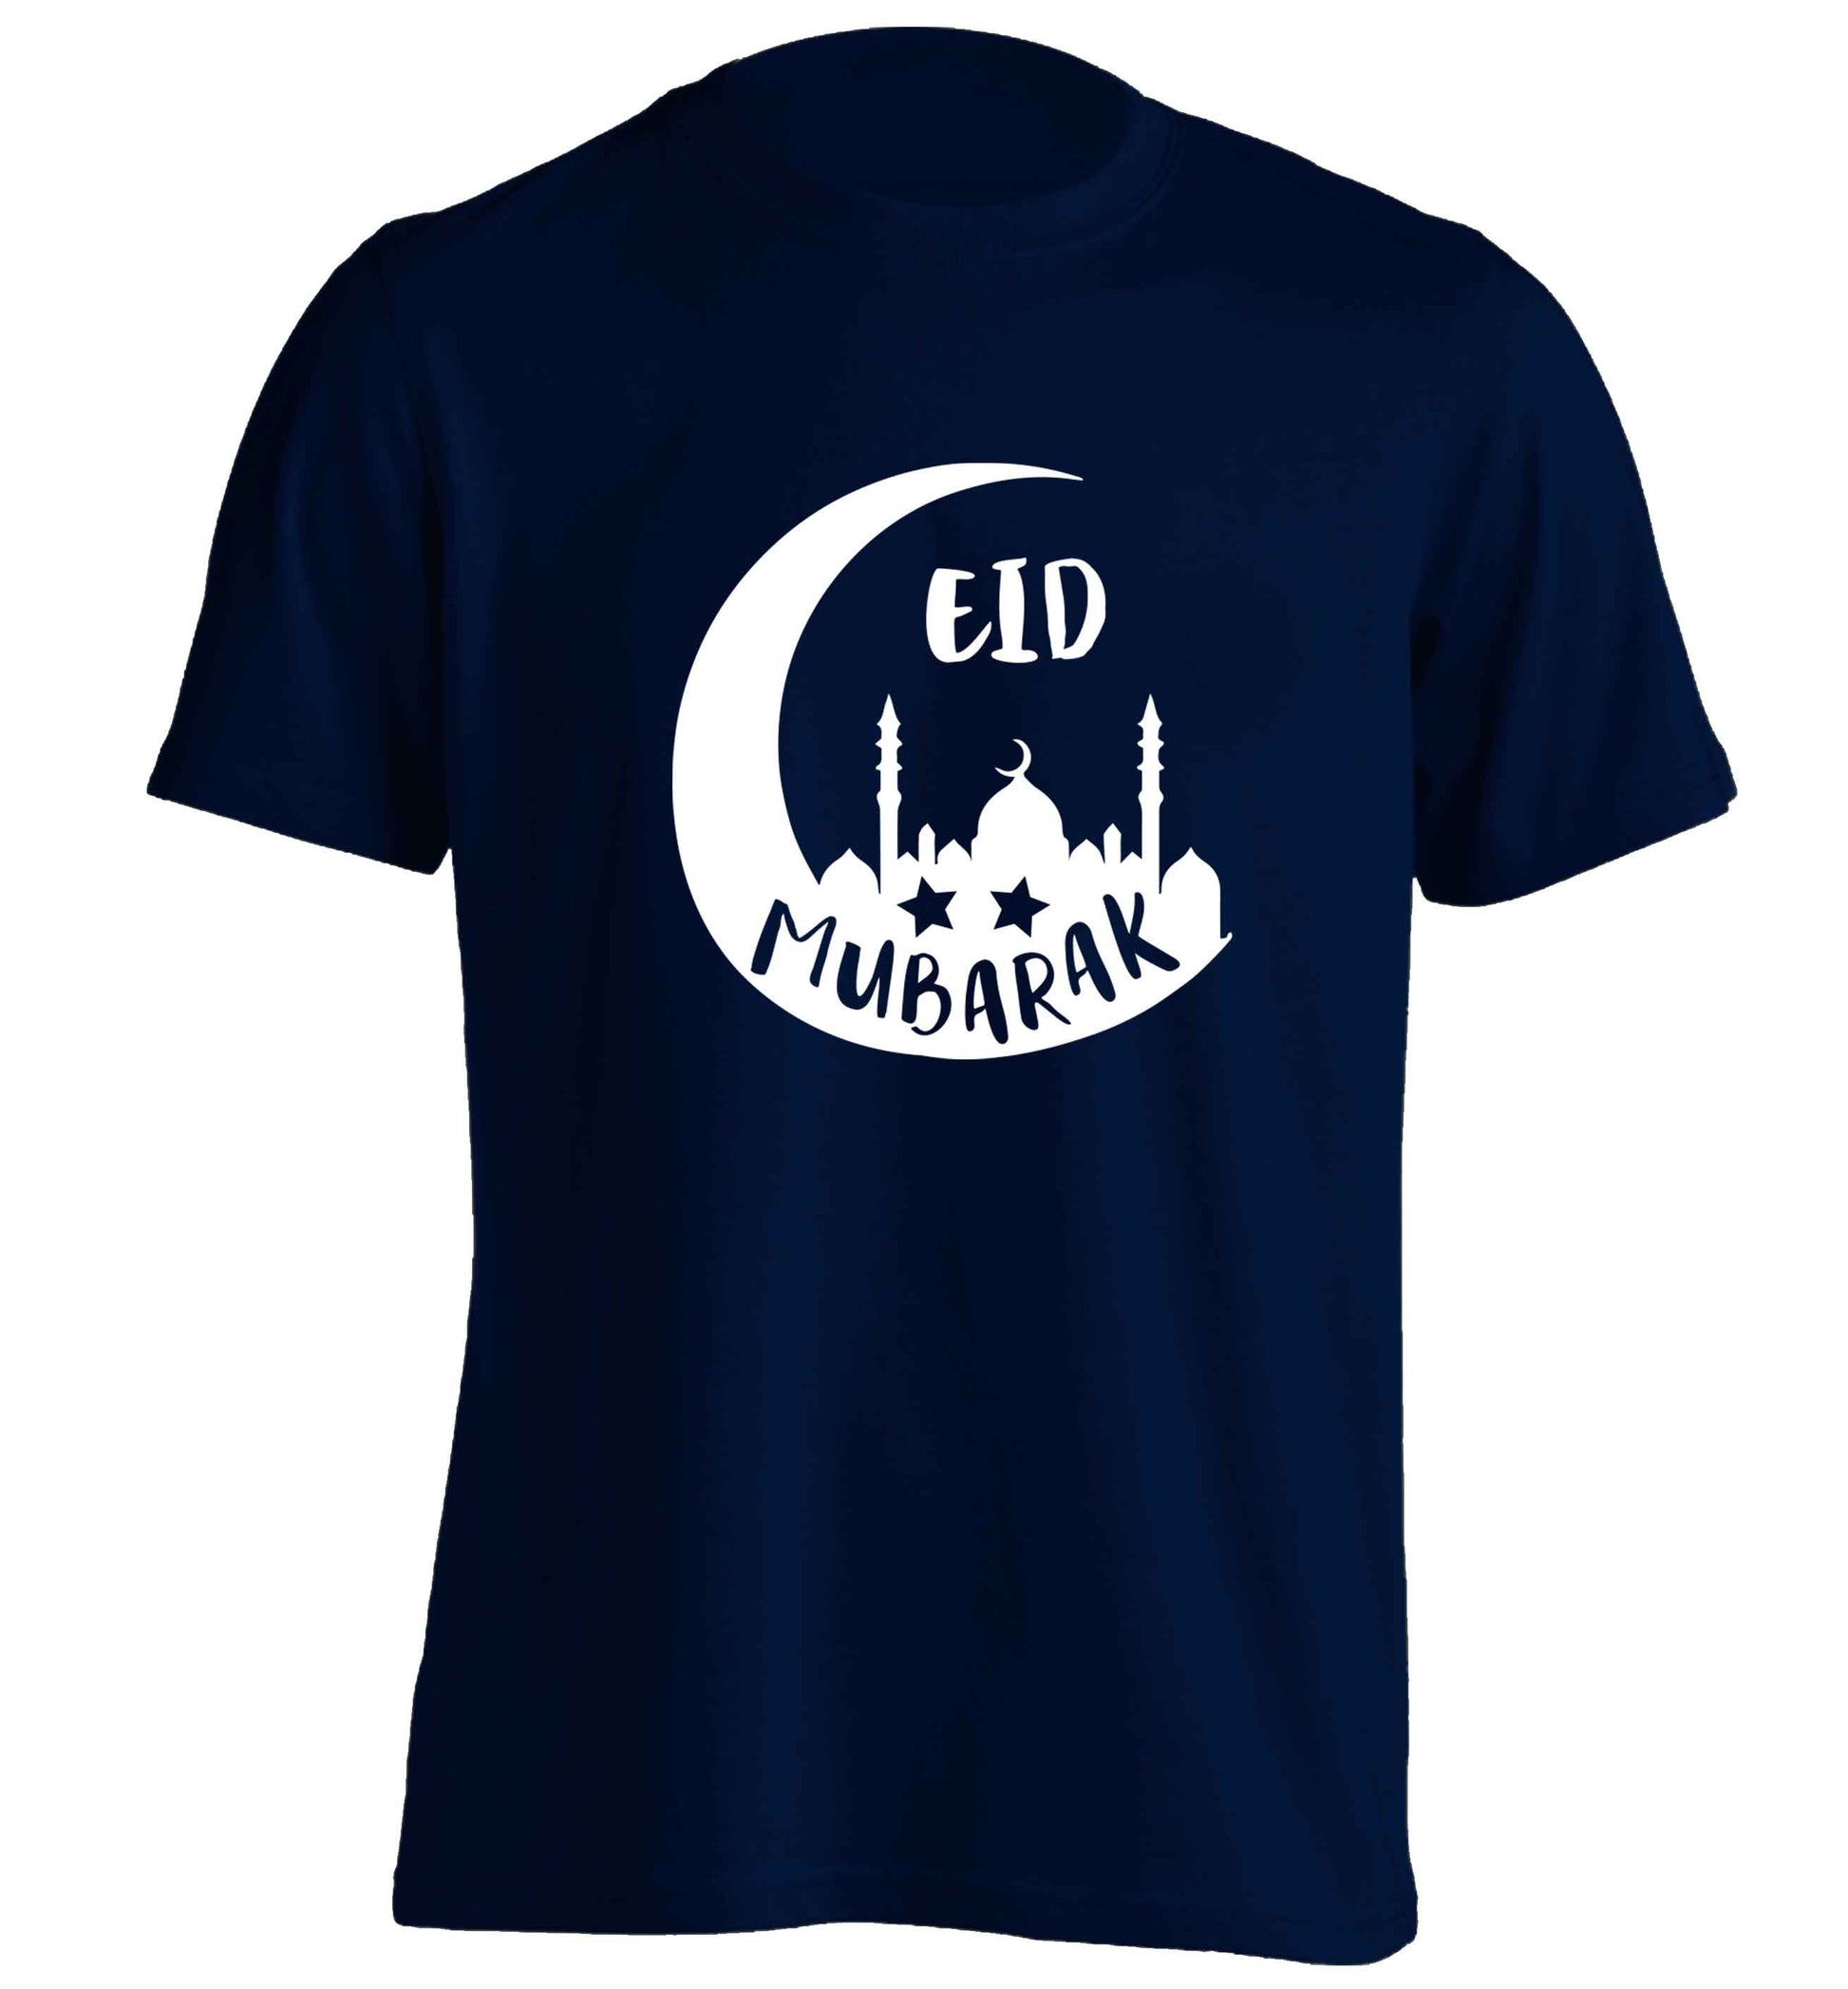 Eid mubarak adults unisex navy Tshirt 2XL